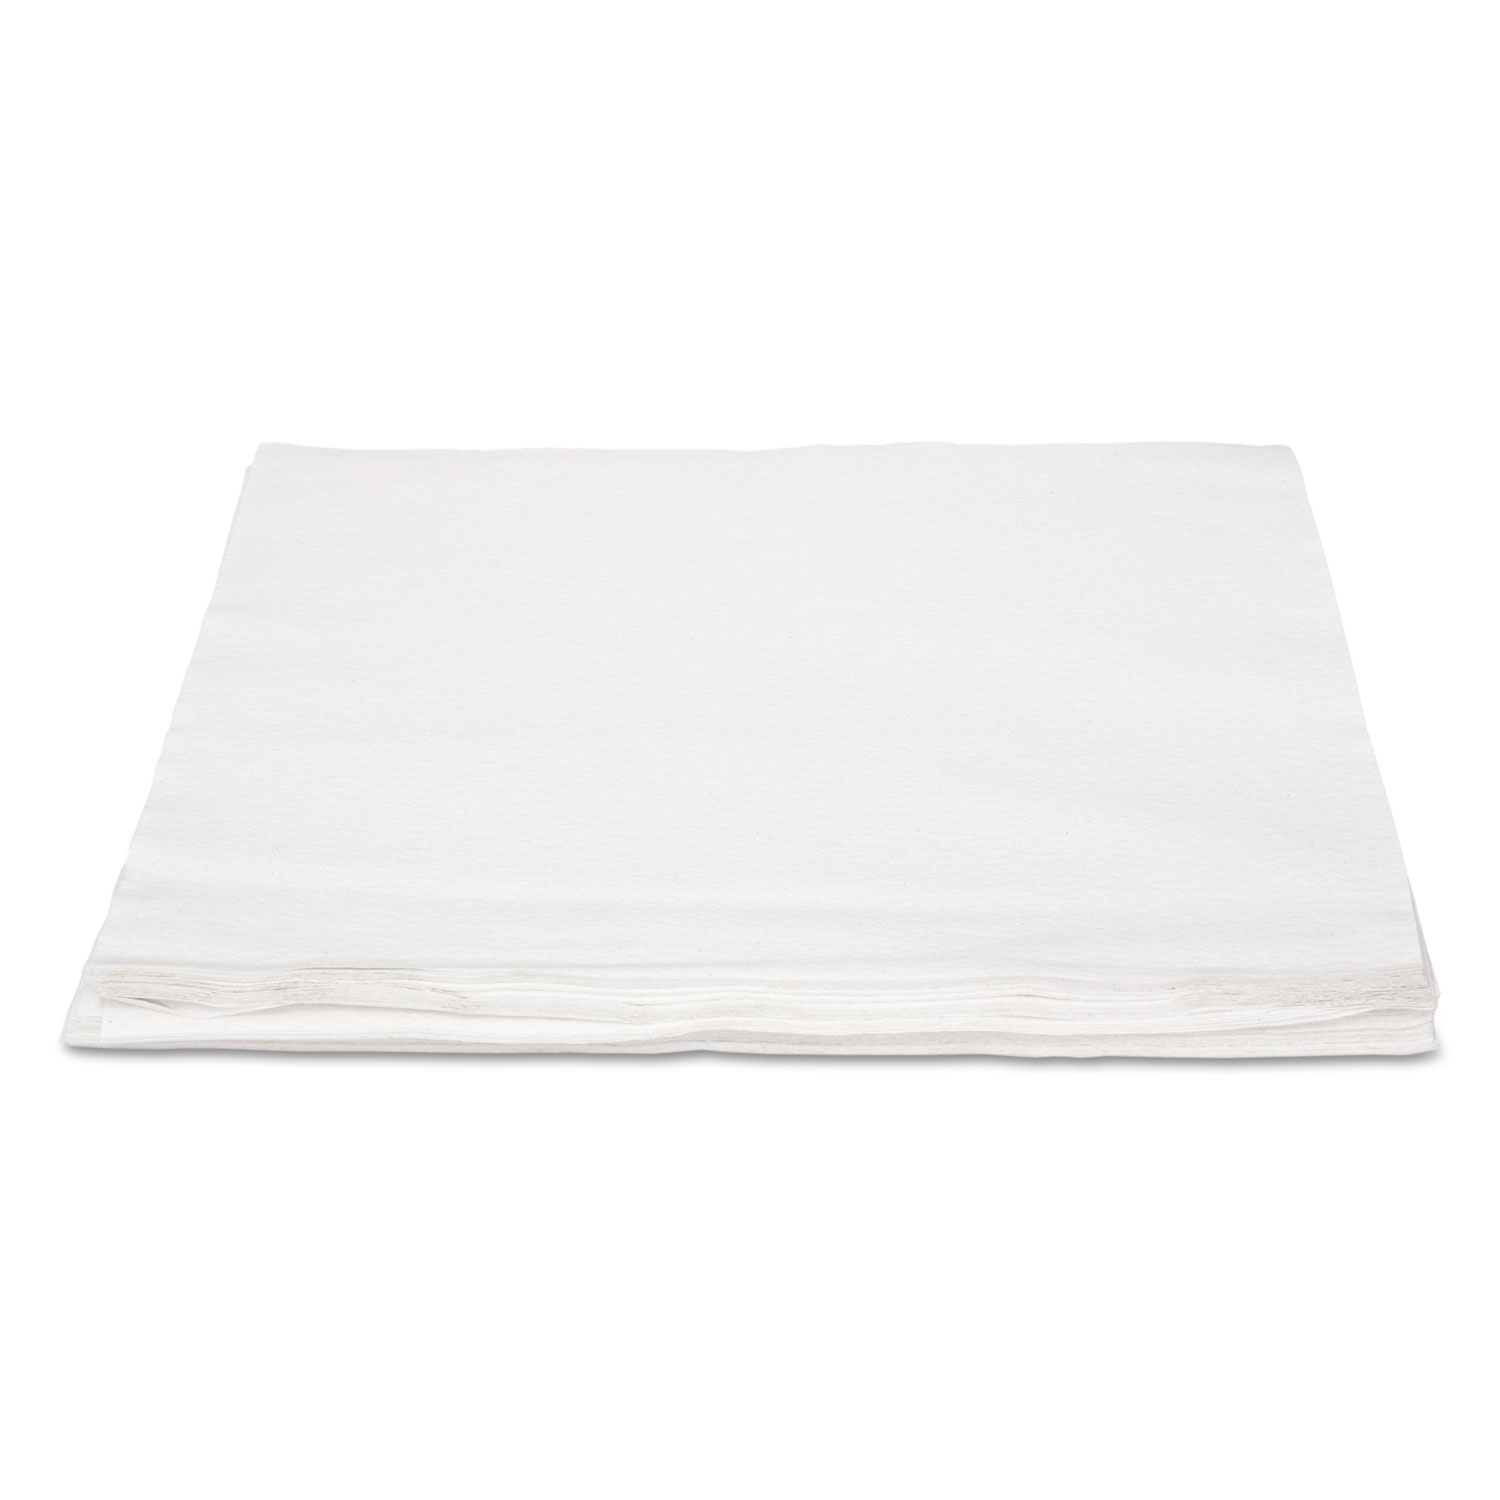 Cloth/Like Napkins/Guest Towels, White, 16 x 16, 1000/Carton